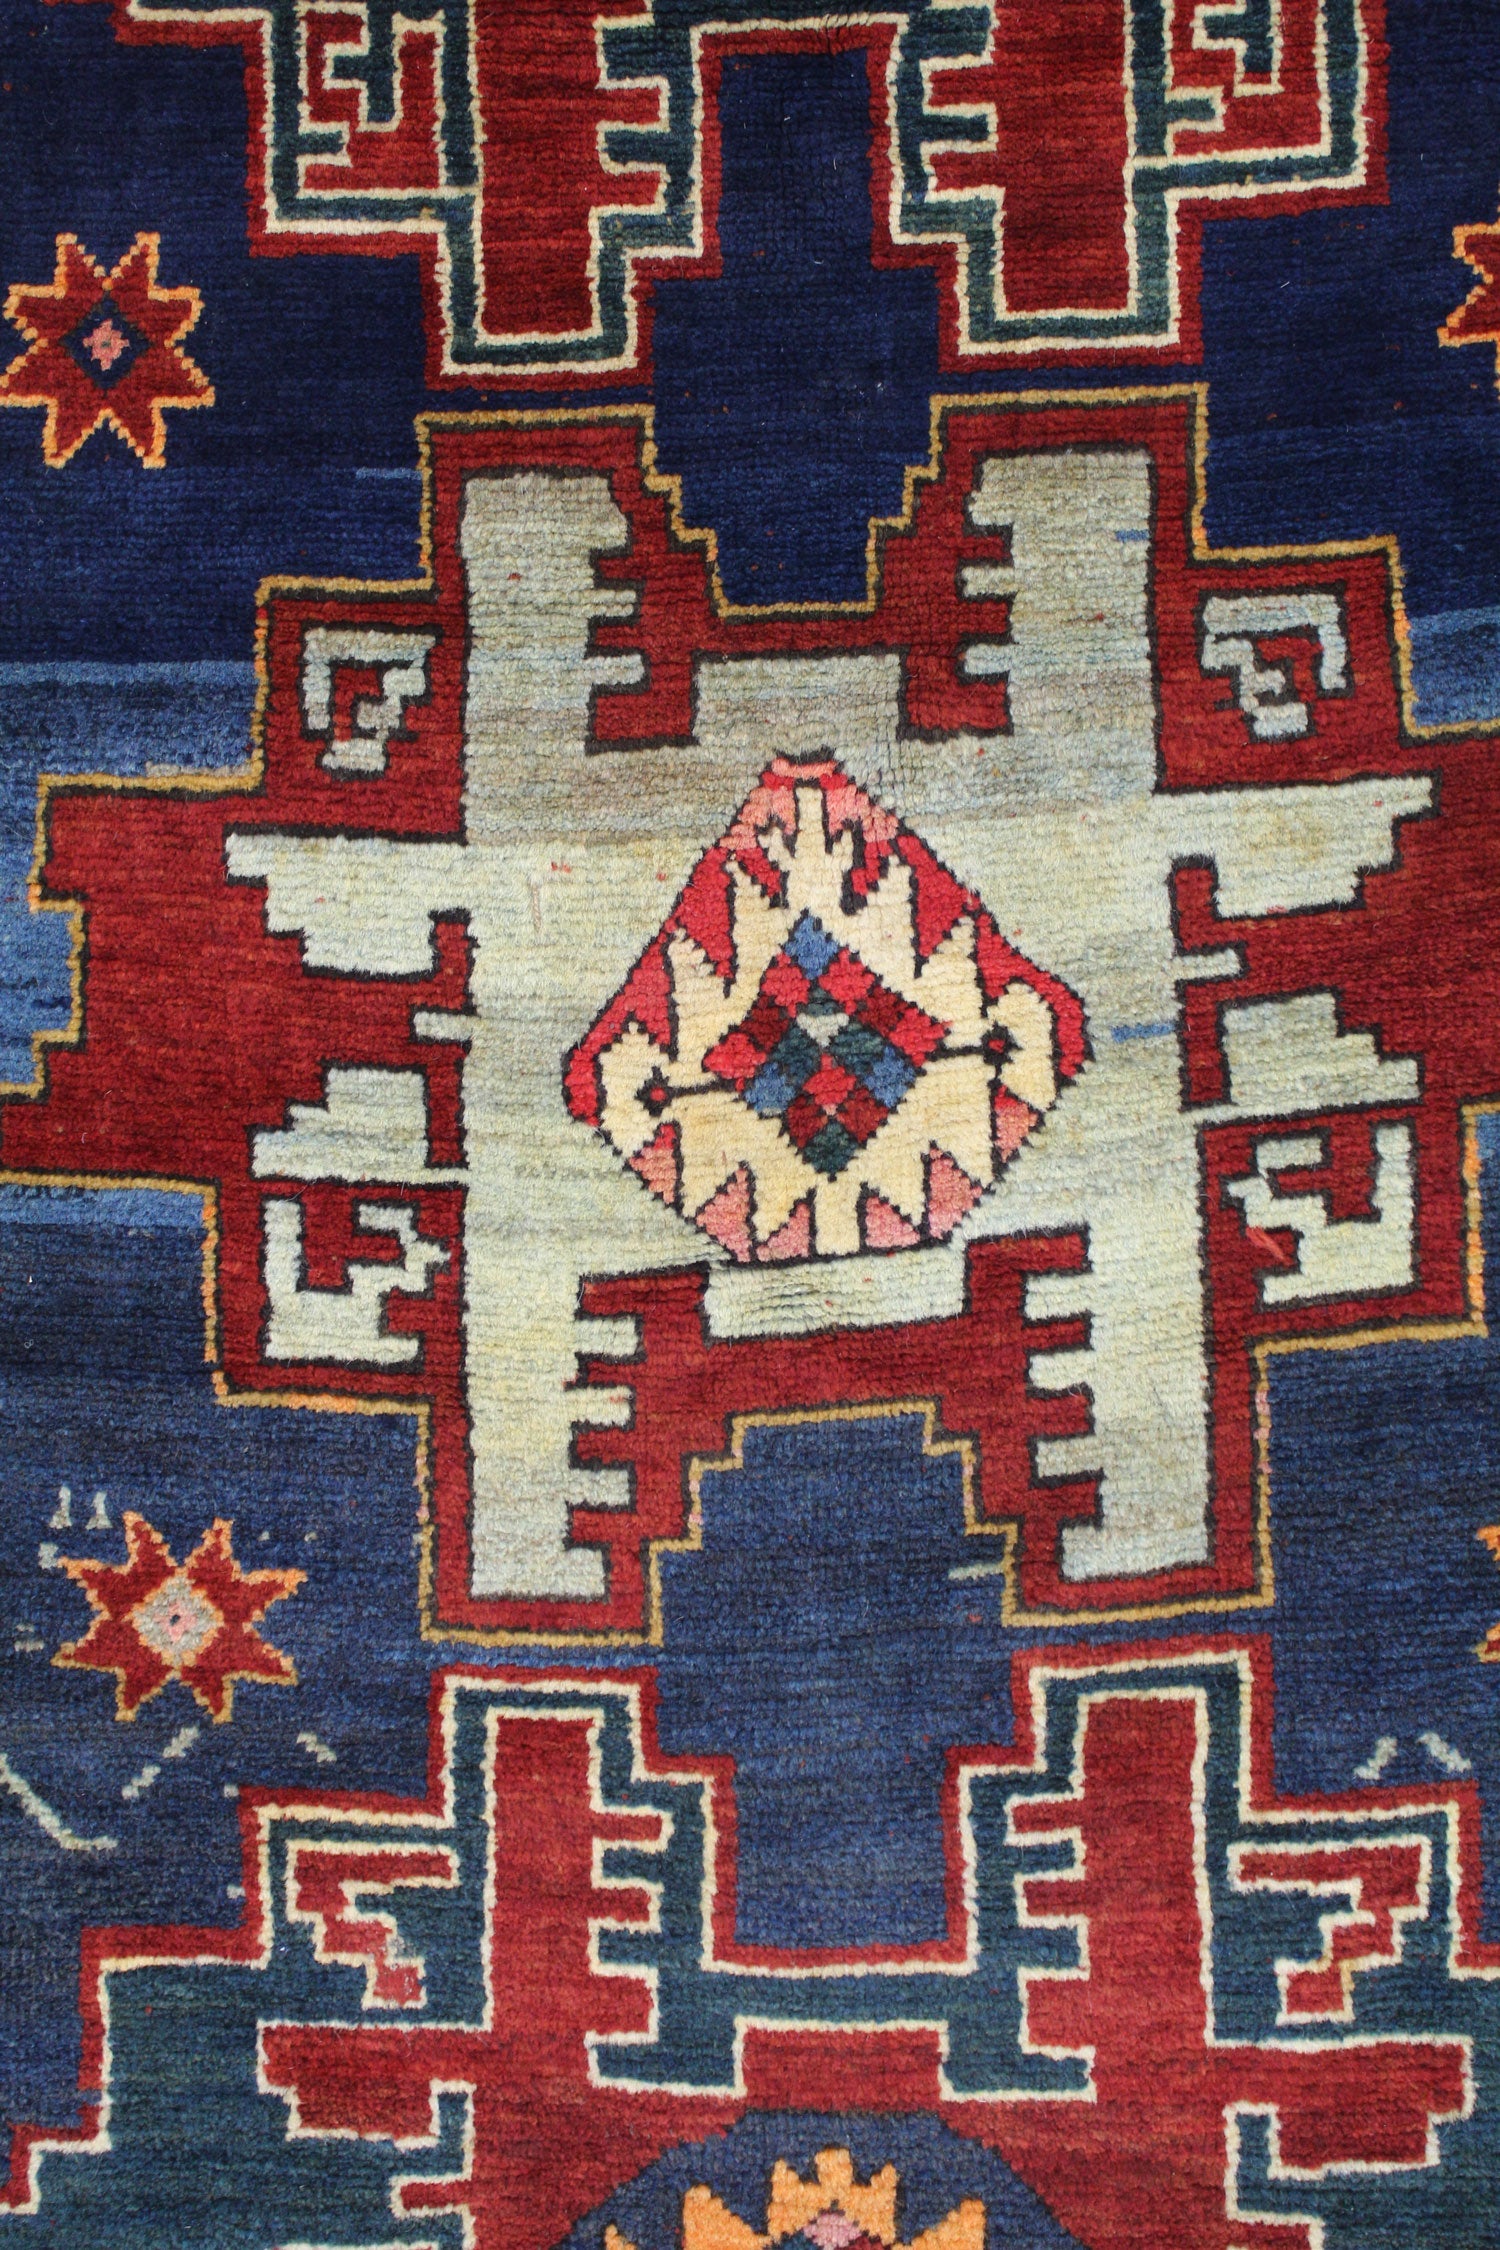 Vintage Lesghi Star Handwoven Tribal Rug, J62484